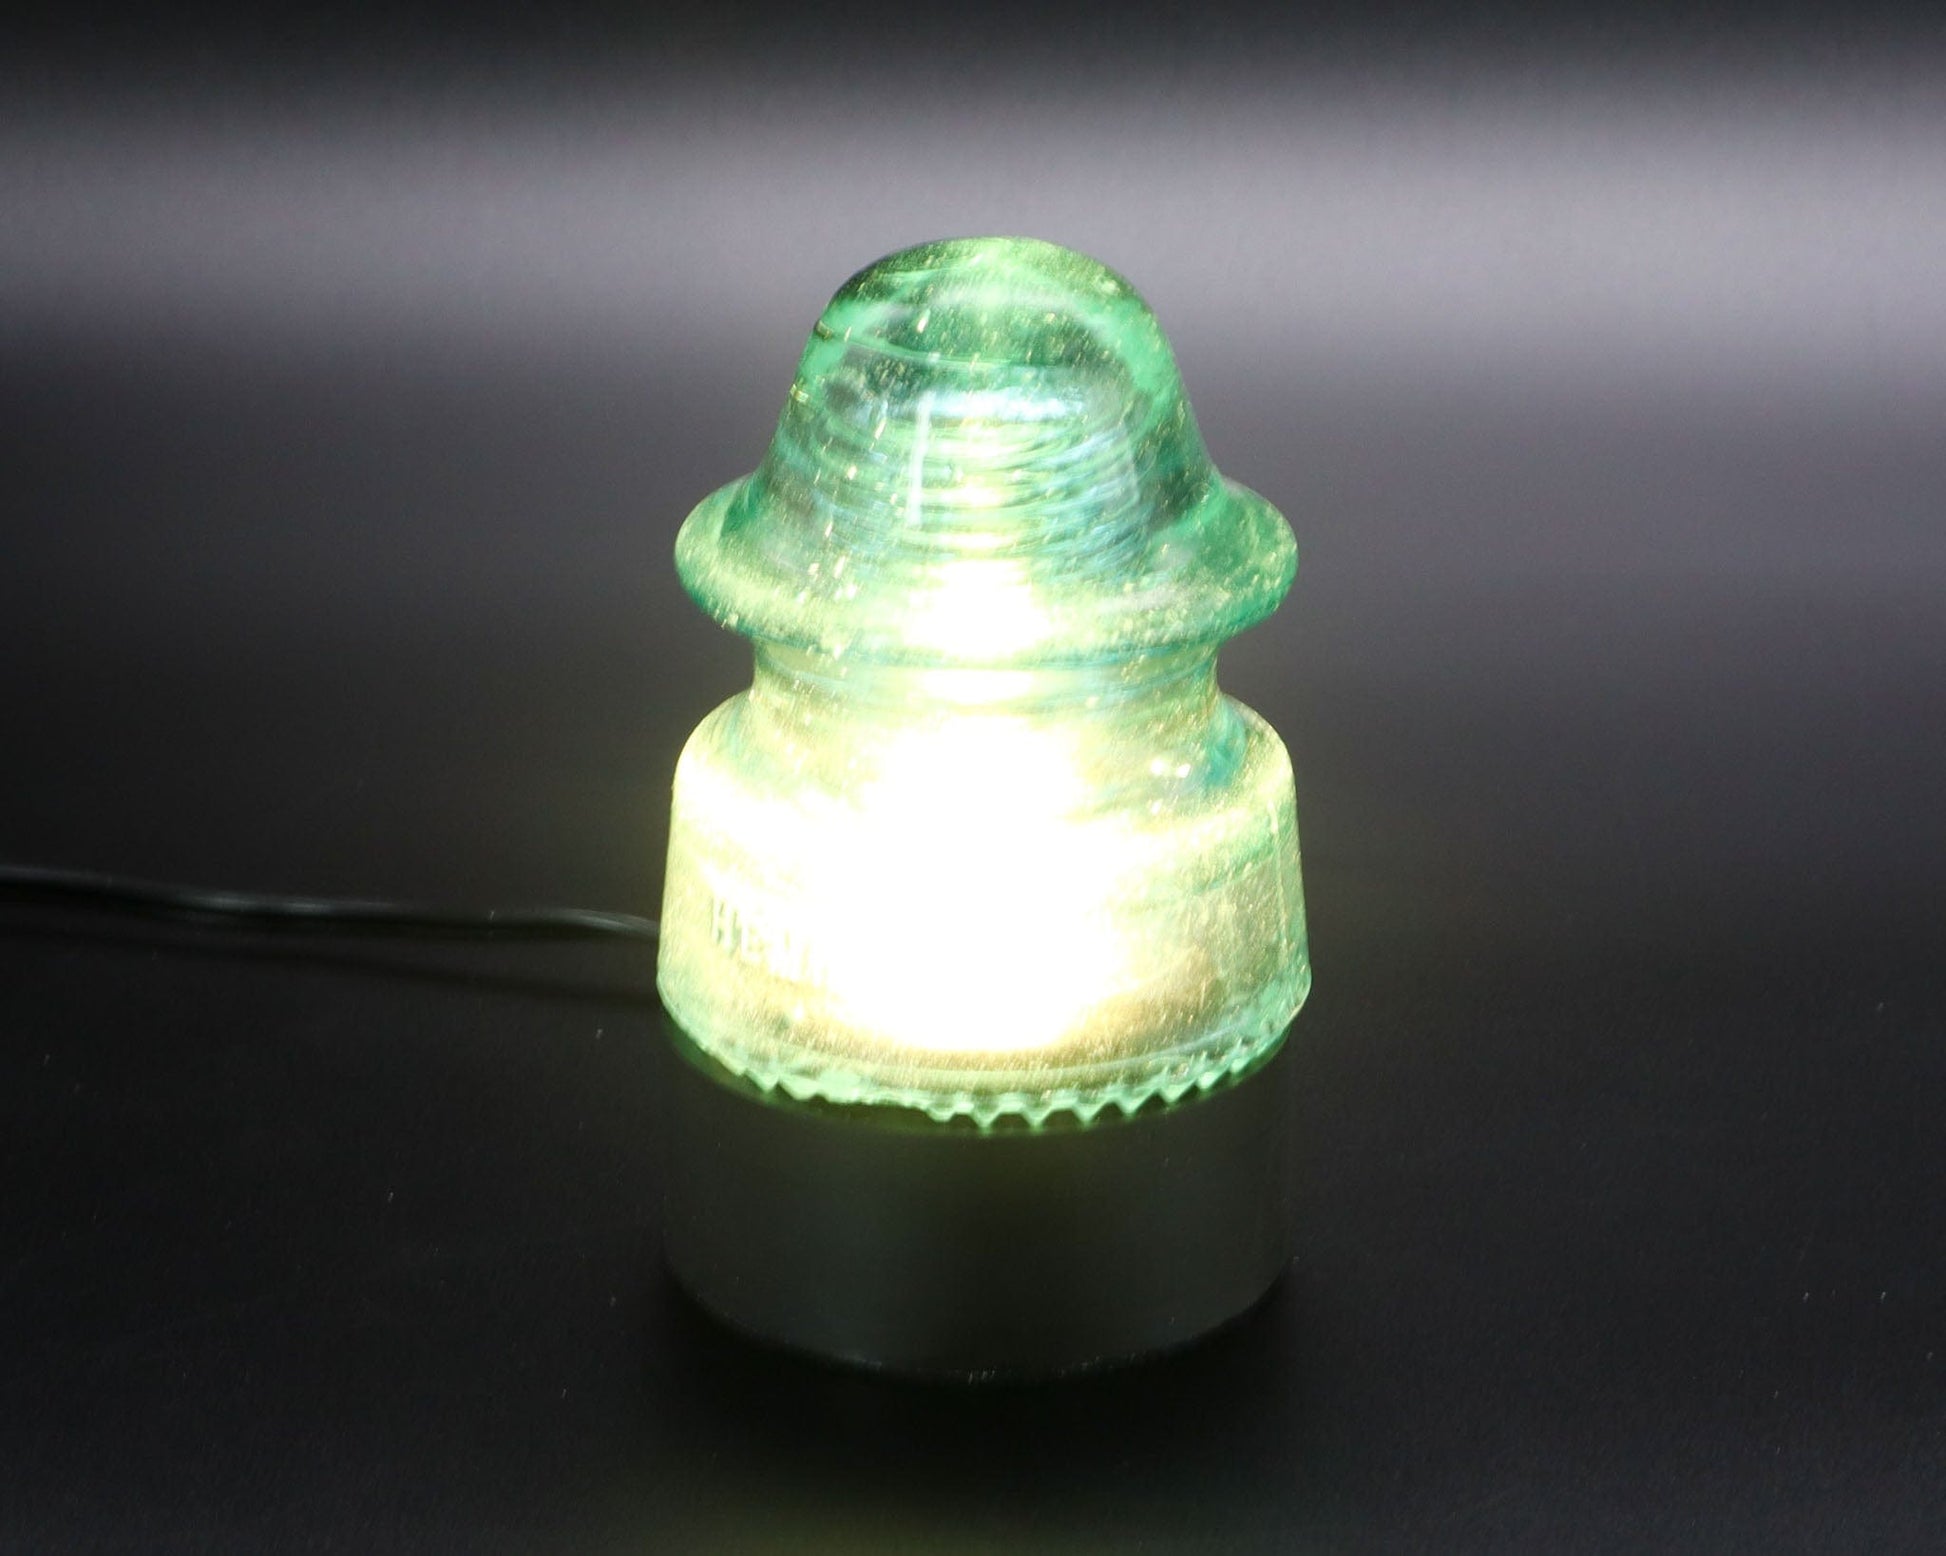 LightAndTimeArt Lamp base Lamp Base for "Hemingray-20, Petticoat" Glass Insulators, Industrial Lighting, Man Cave Decor